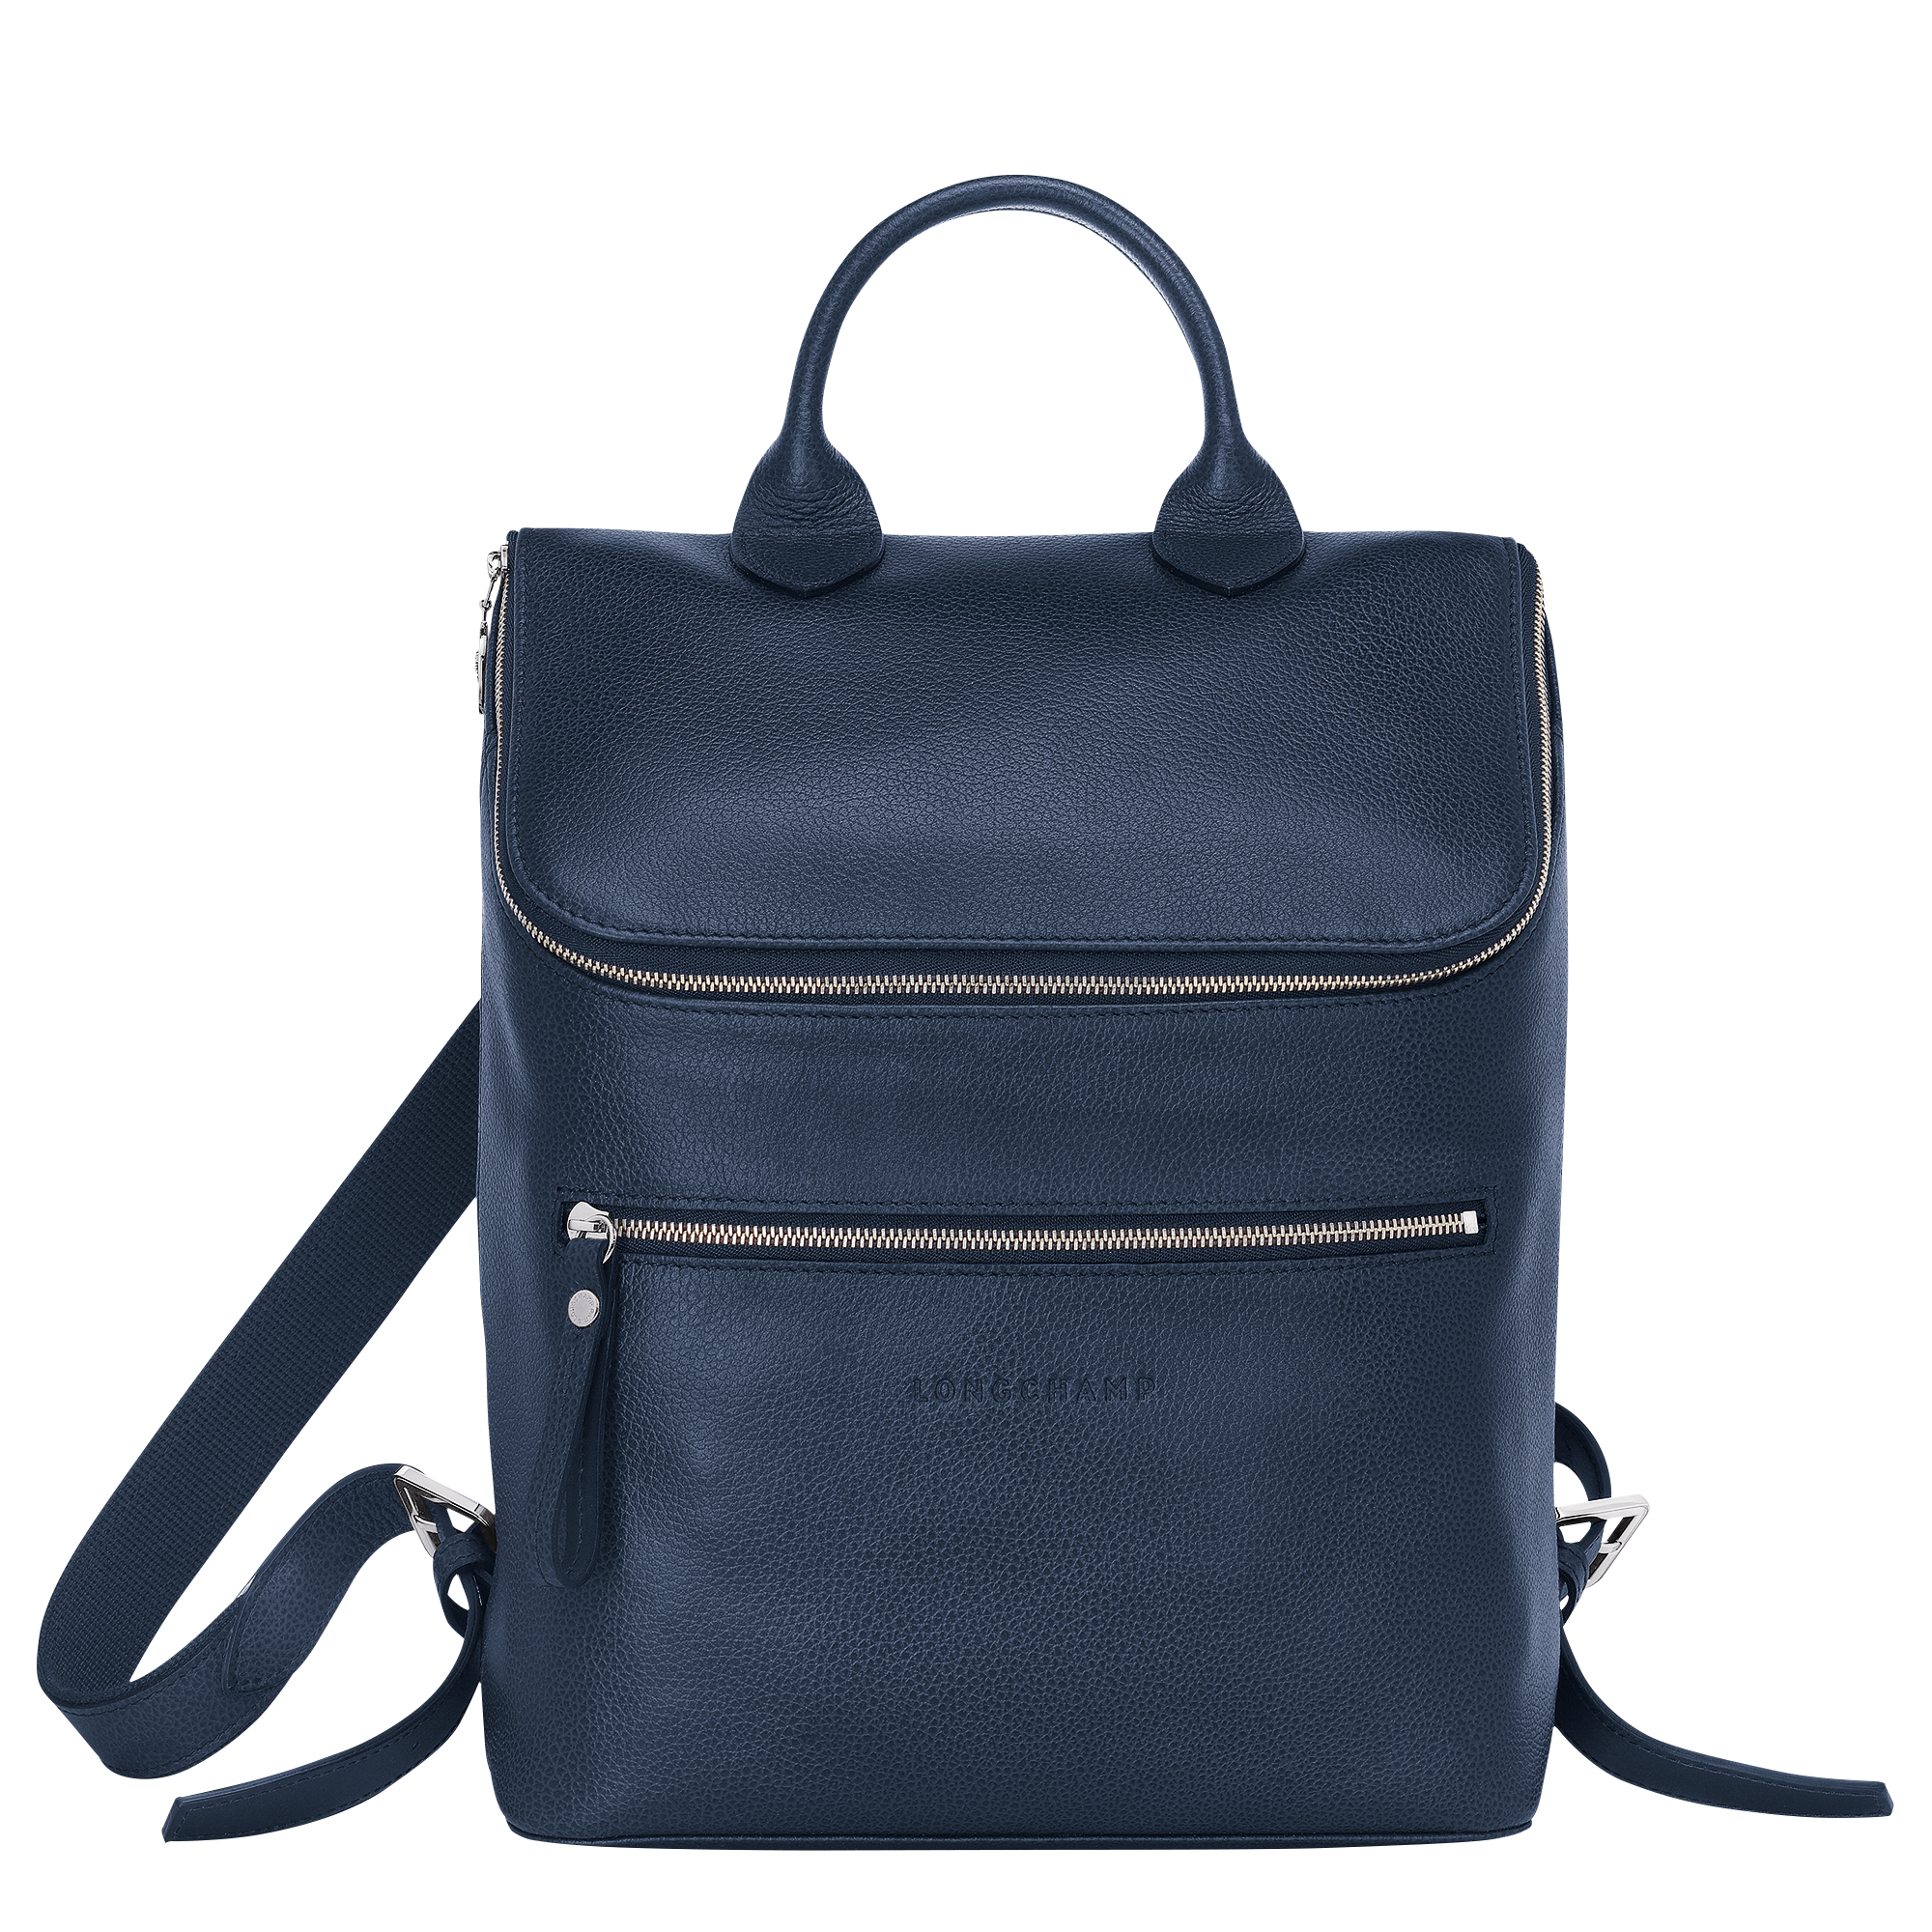 longchamp veau foulonne backpack